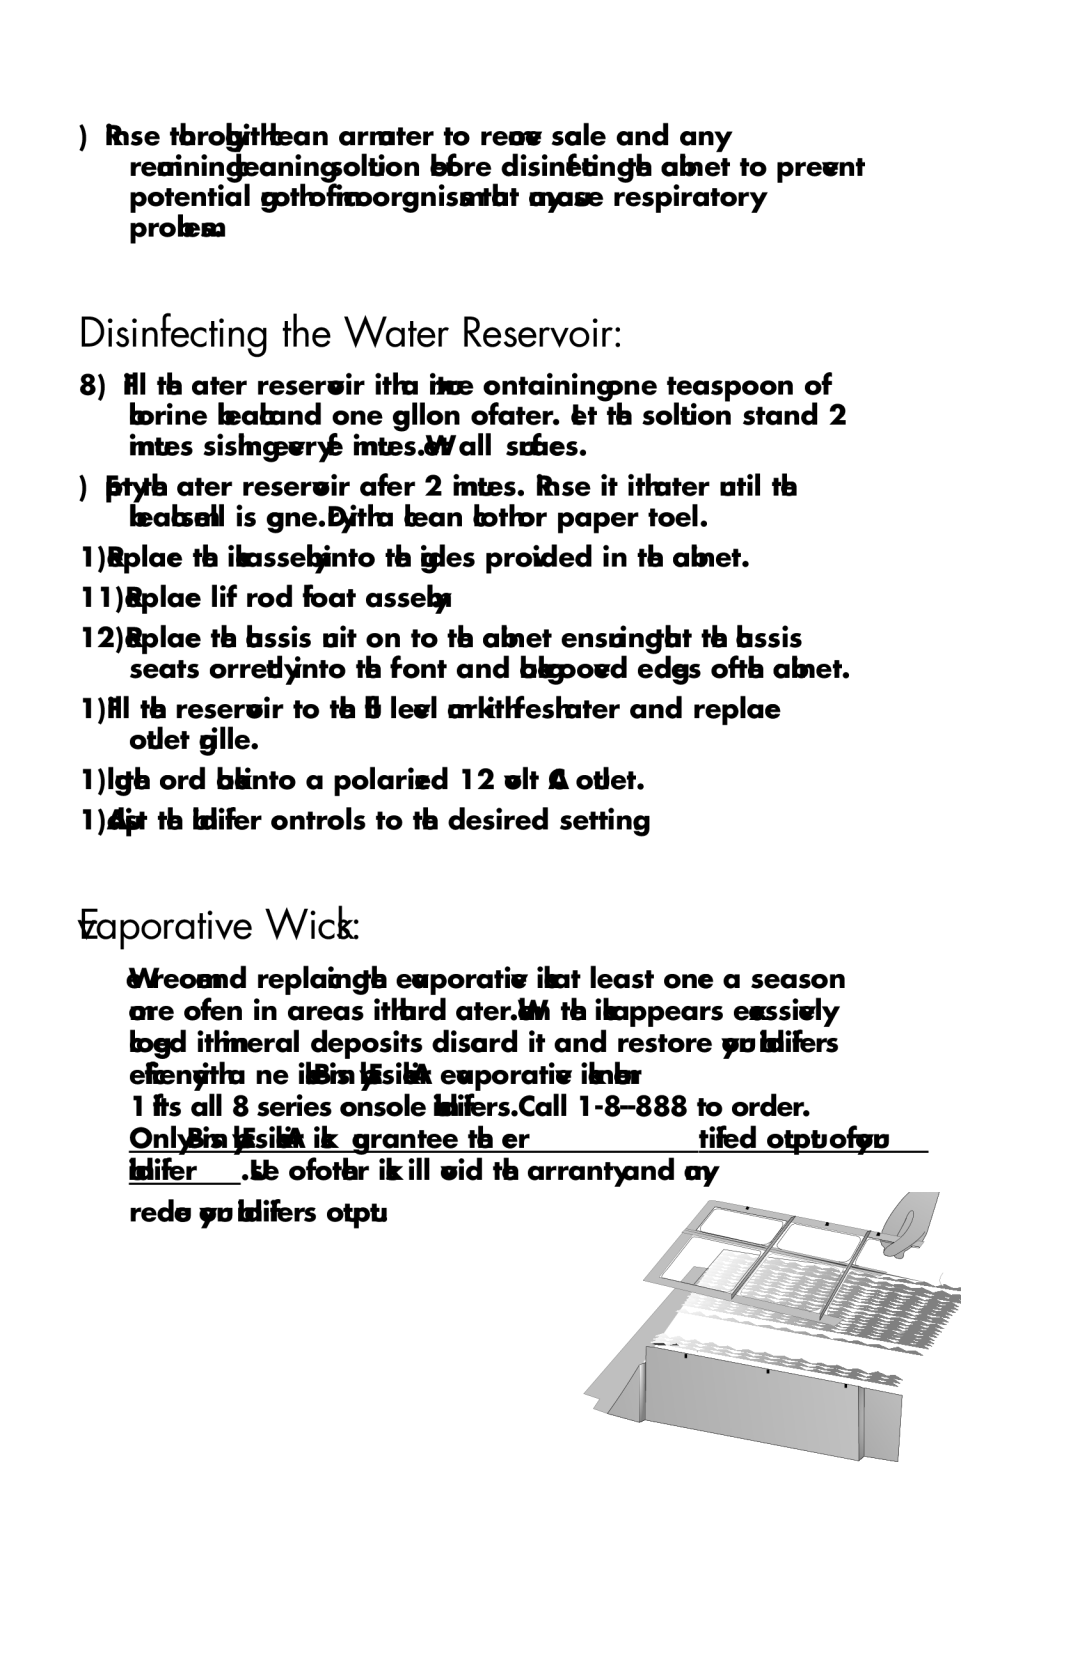 Essick Air 826 800 manual Disinfecting the Water Reservoir, Evaporative Wicks 